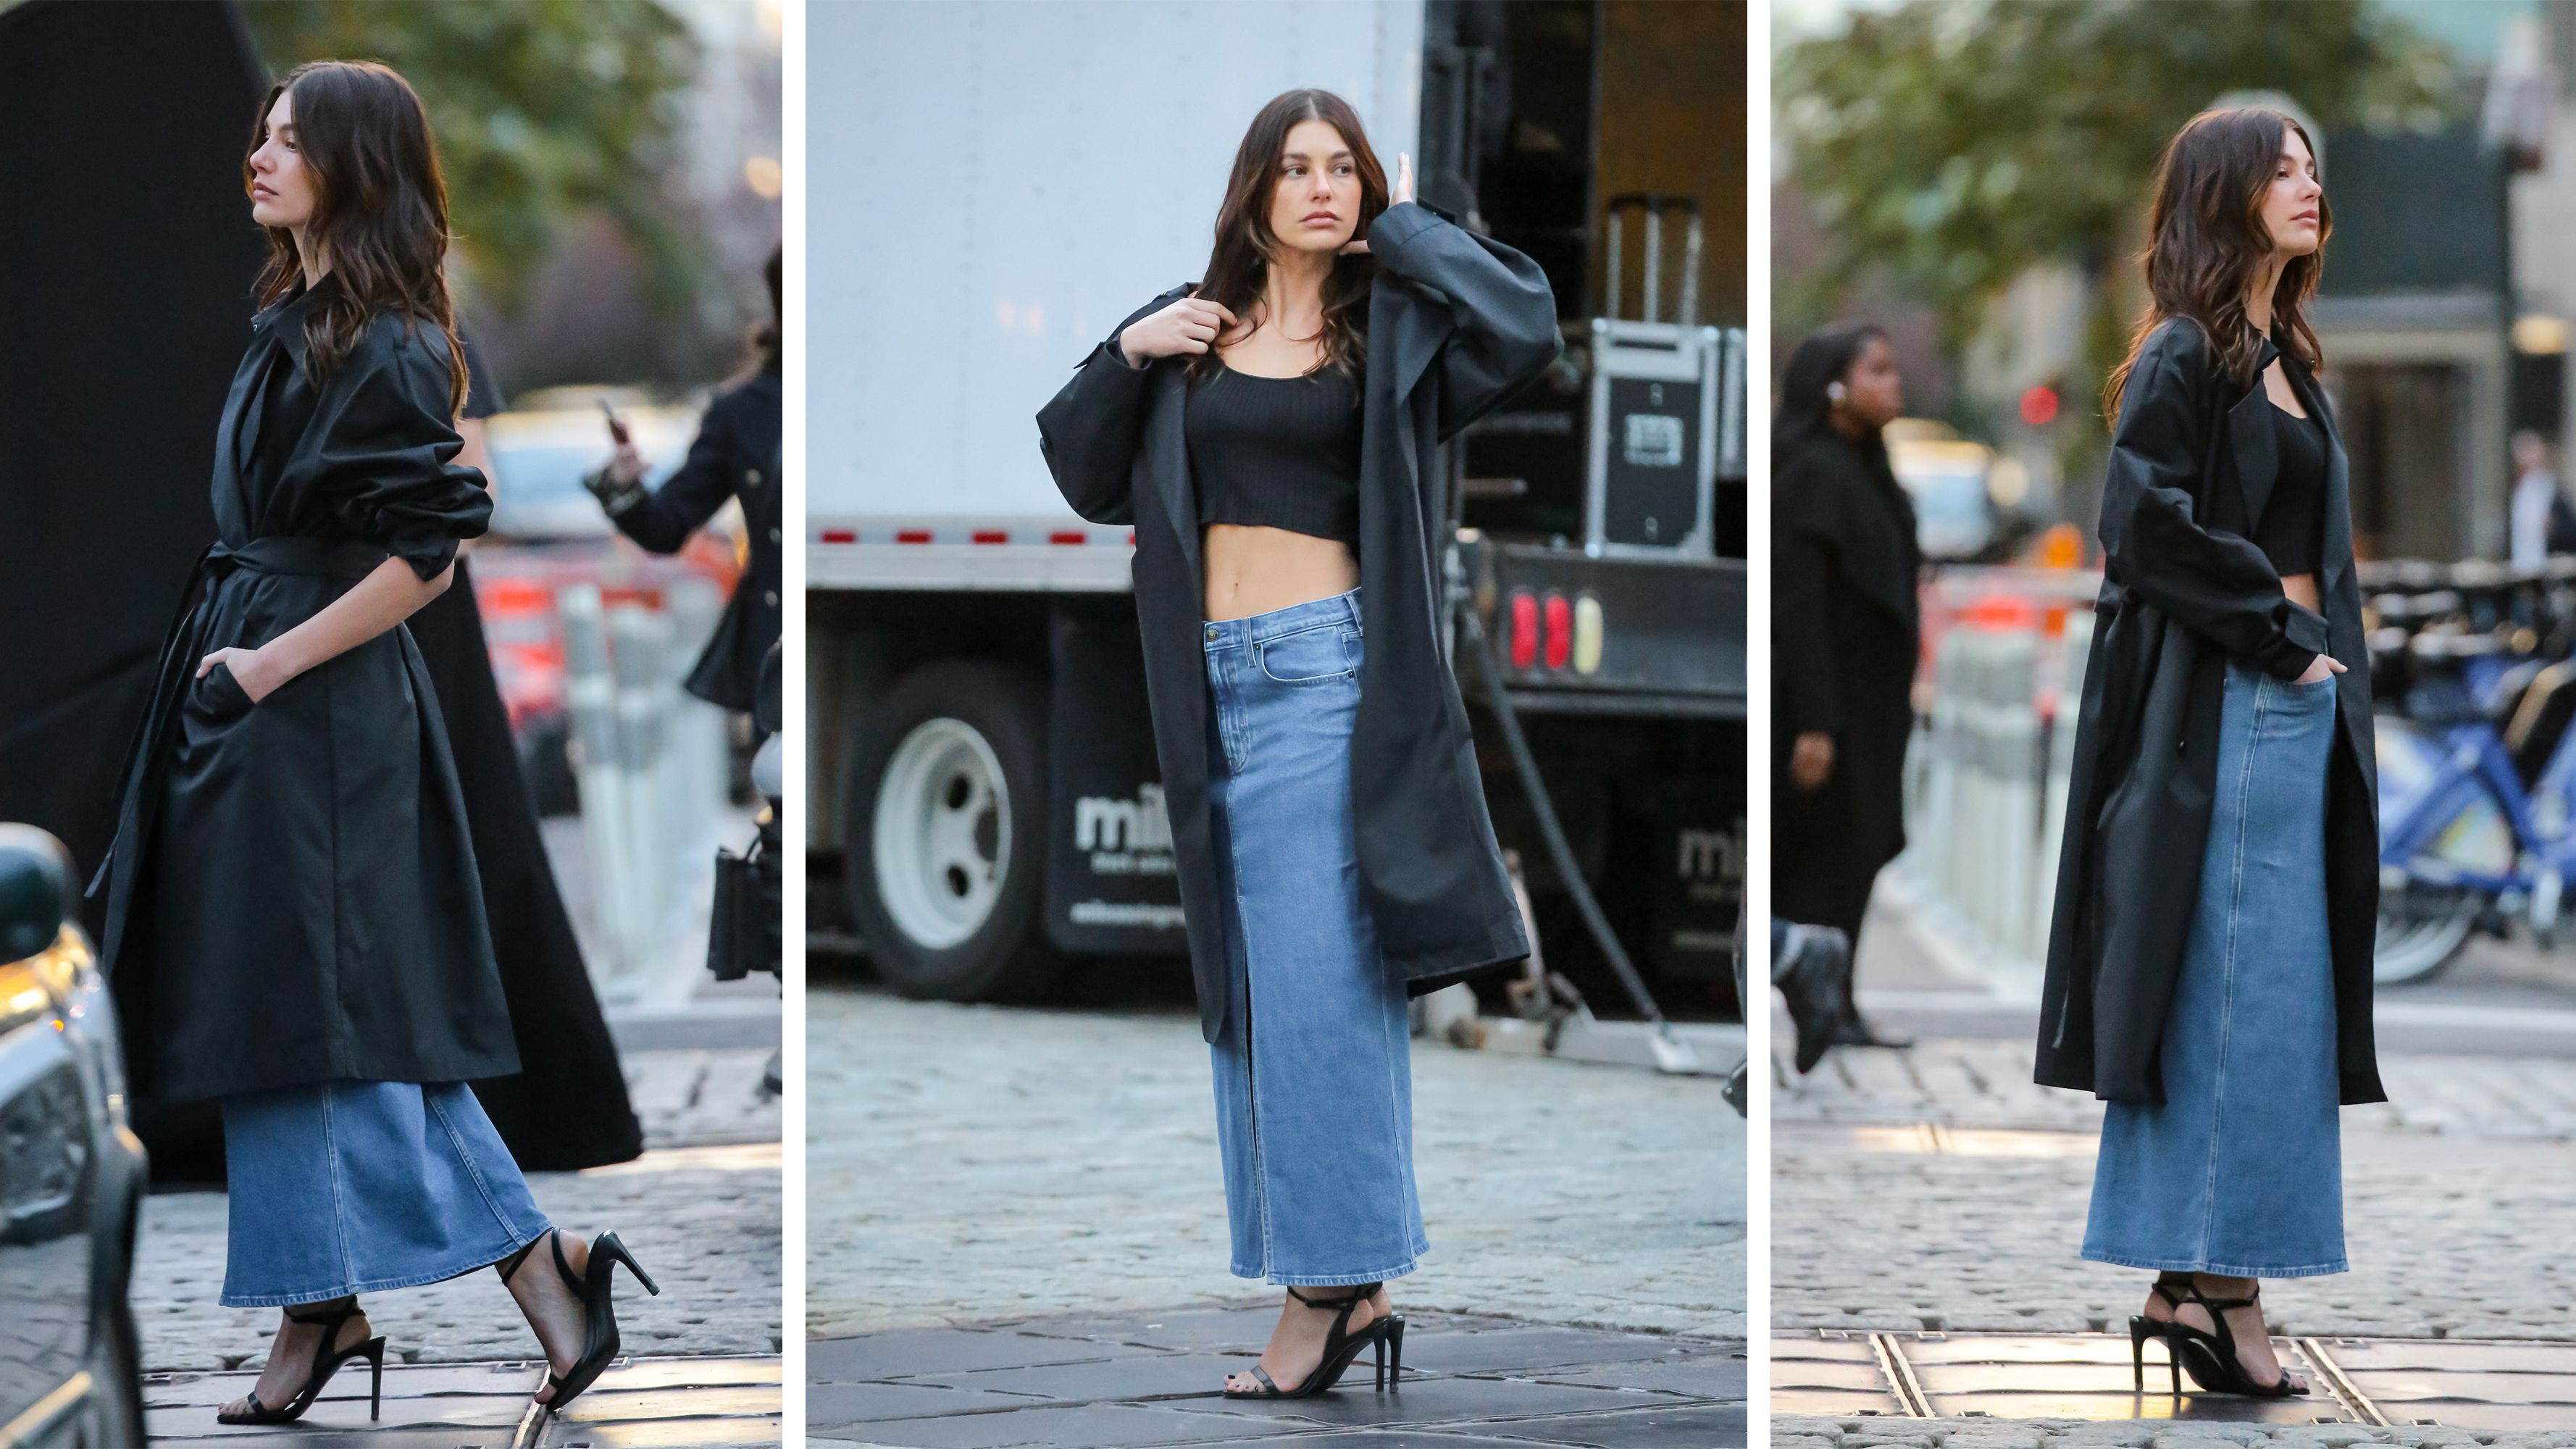 Camila Morrone's Latest Street-Style Look Goes Back to the Basics